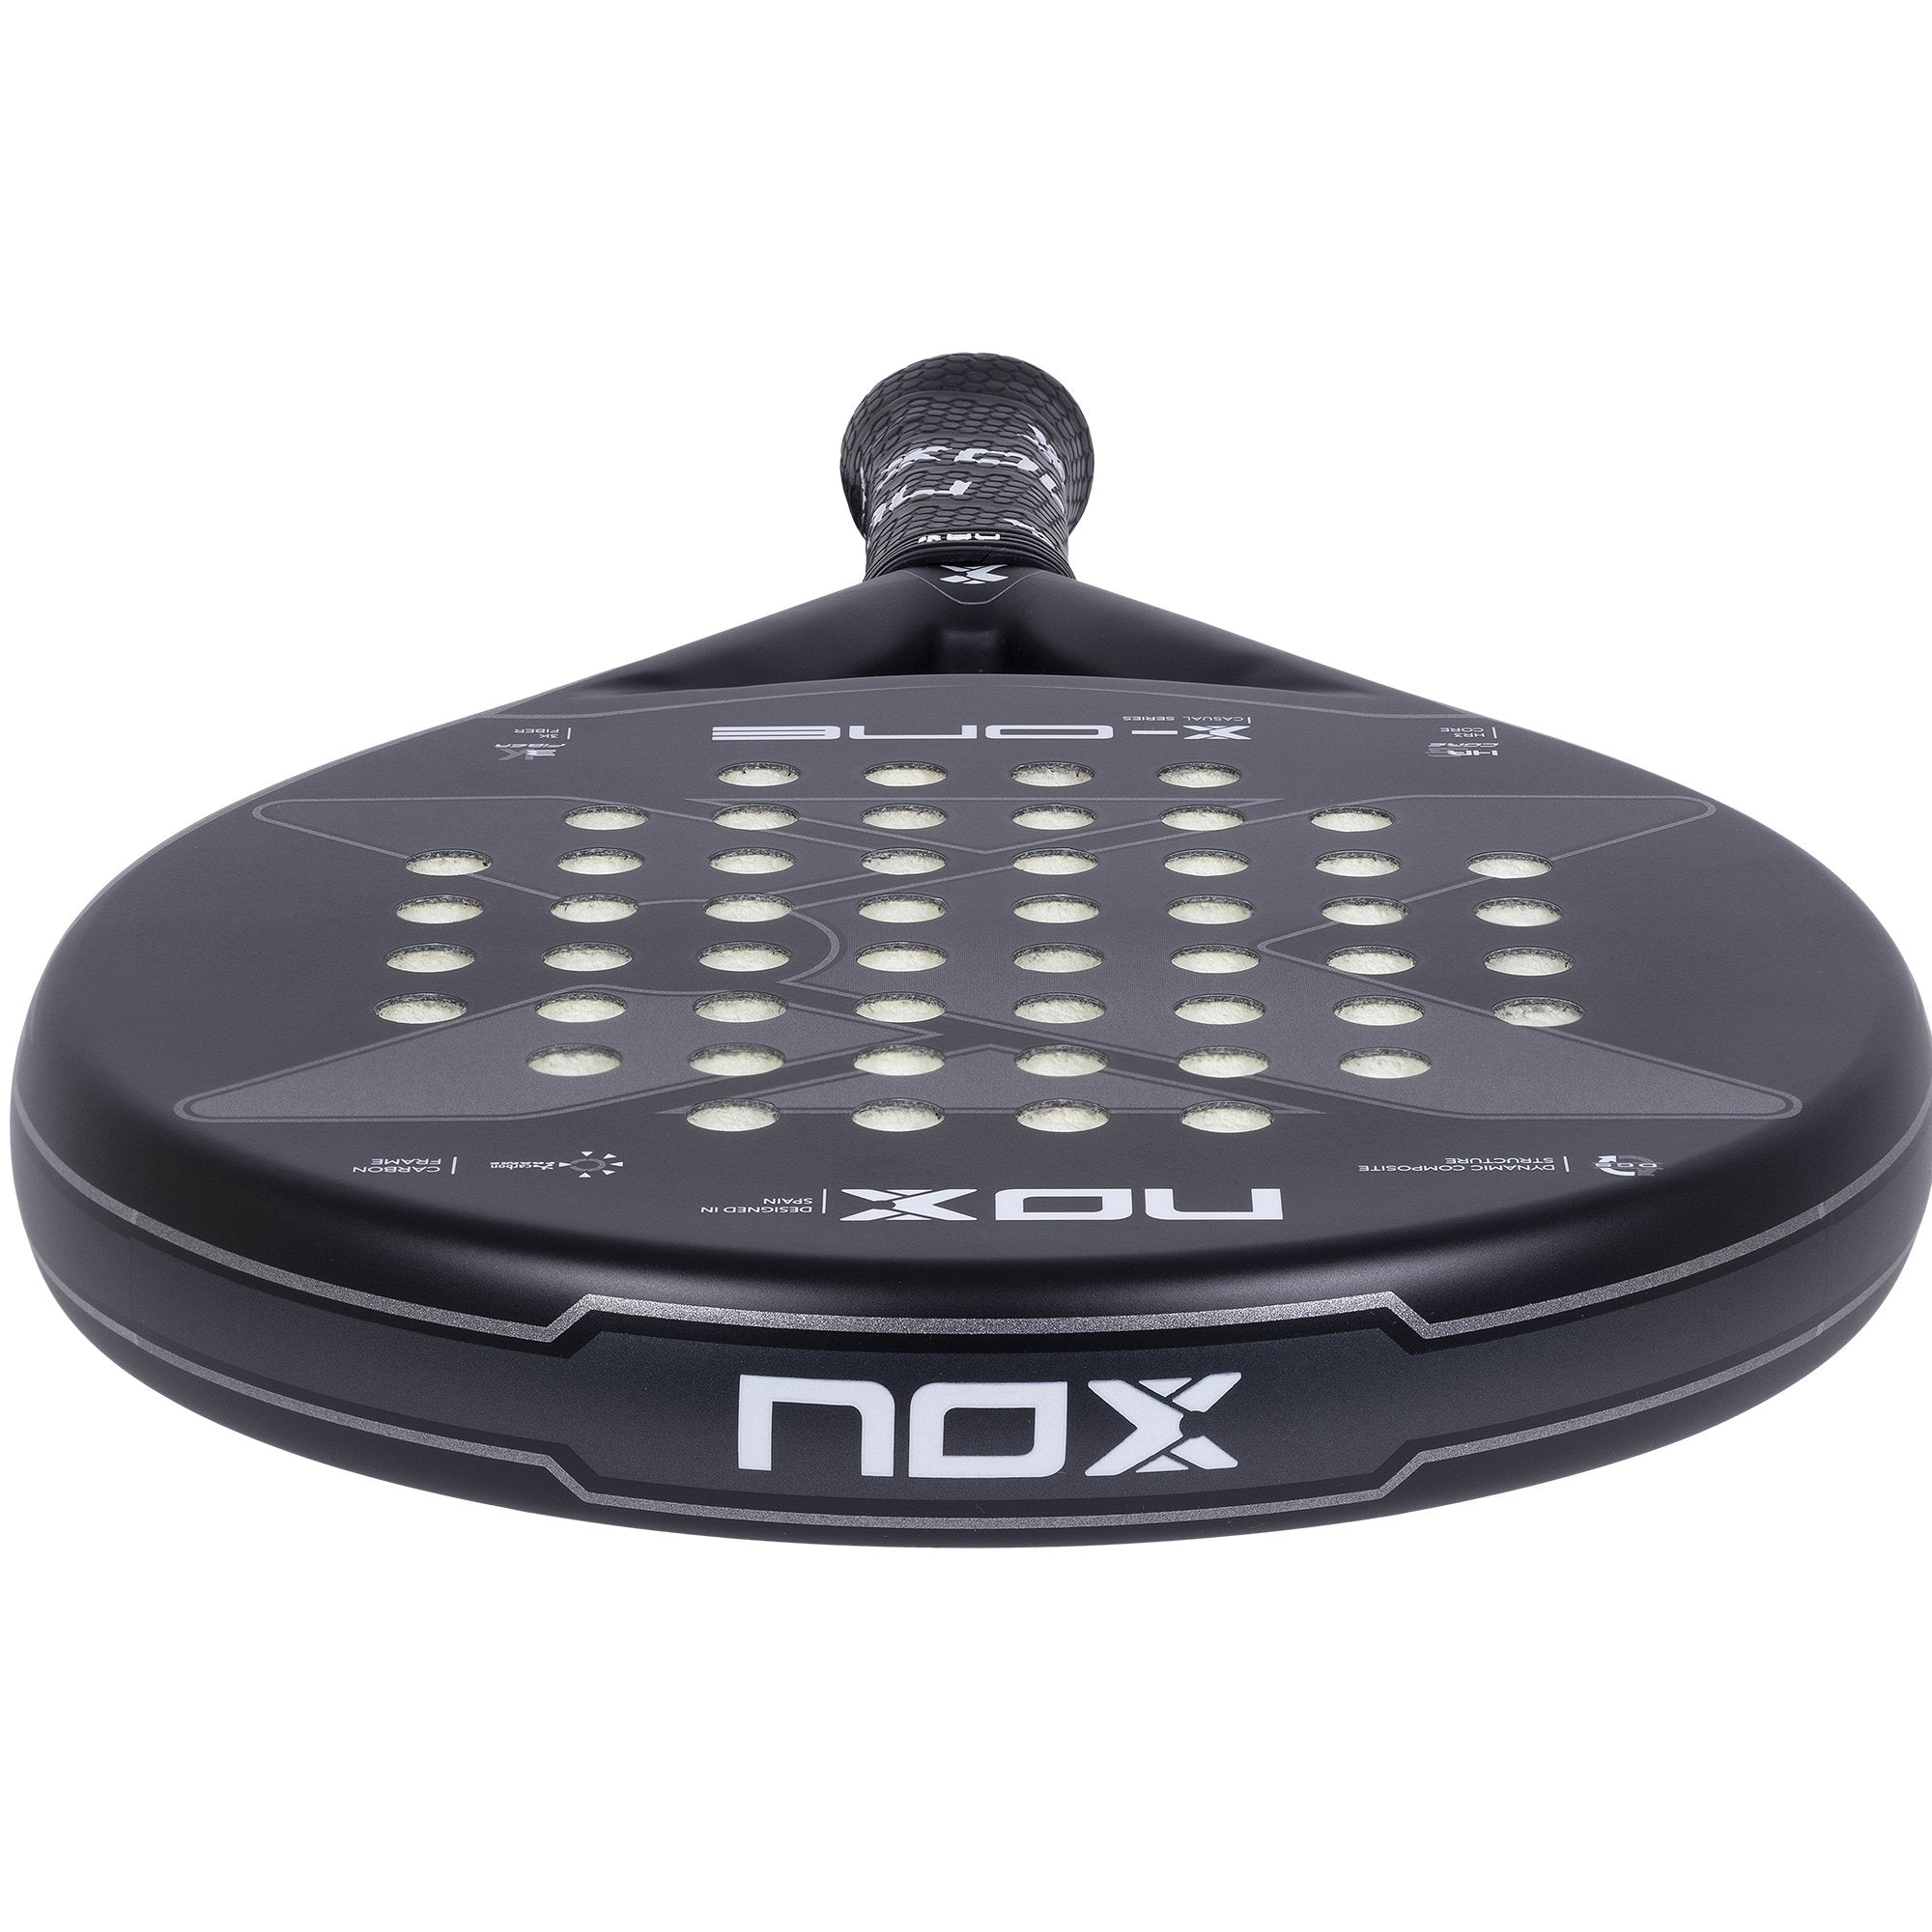 NOX X-ONE 2023 - Tennis Boutique México